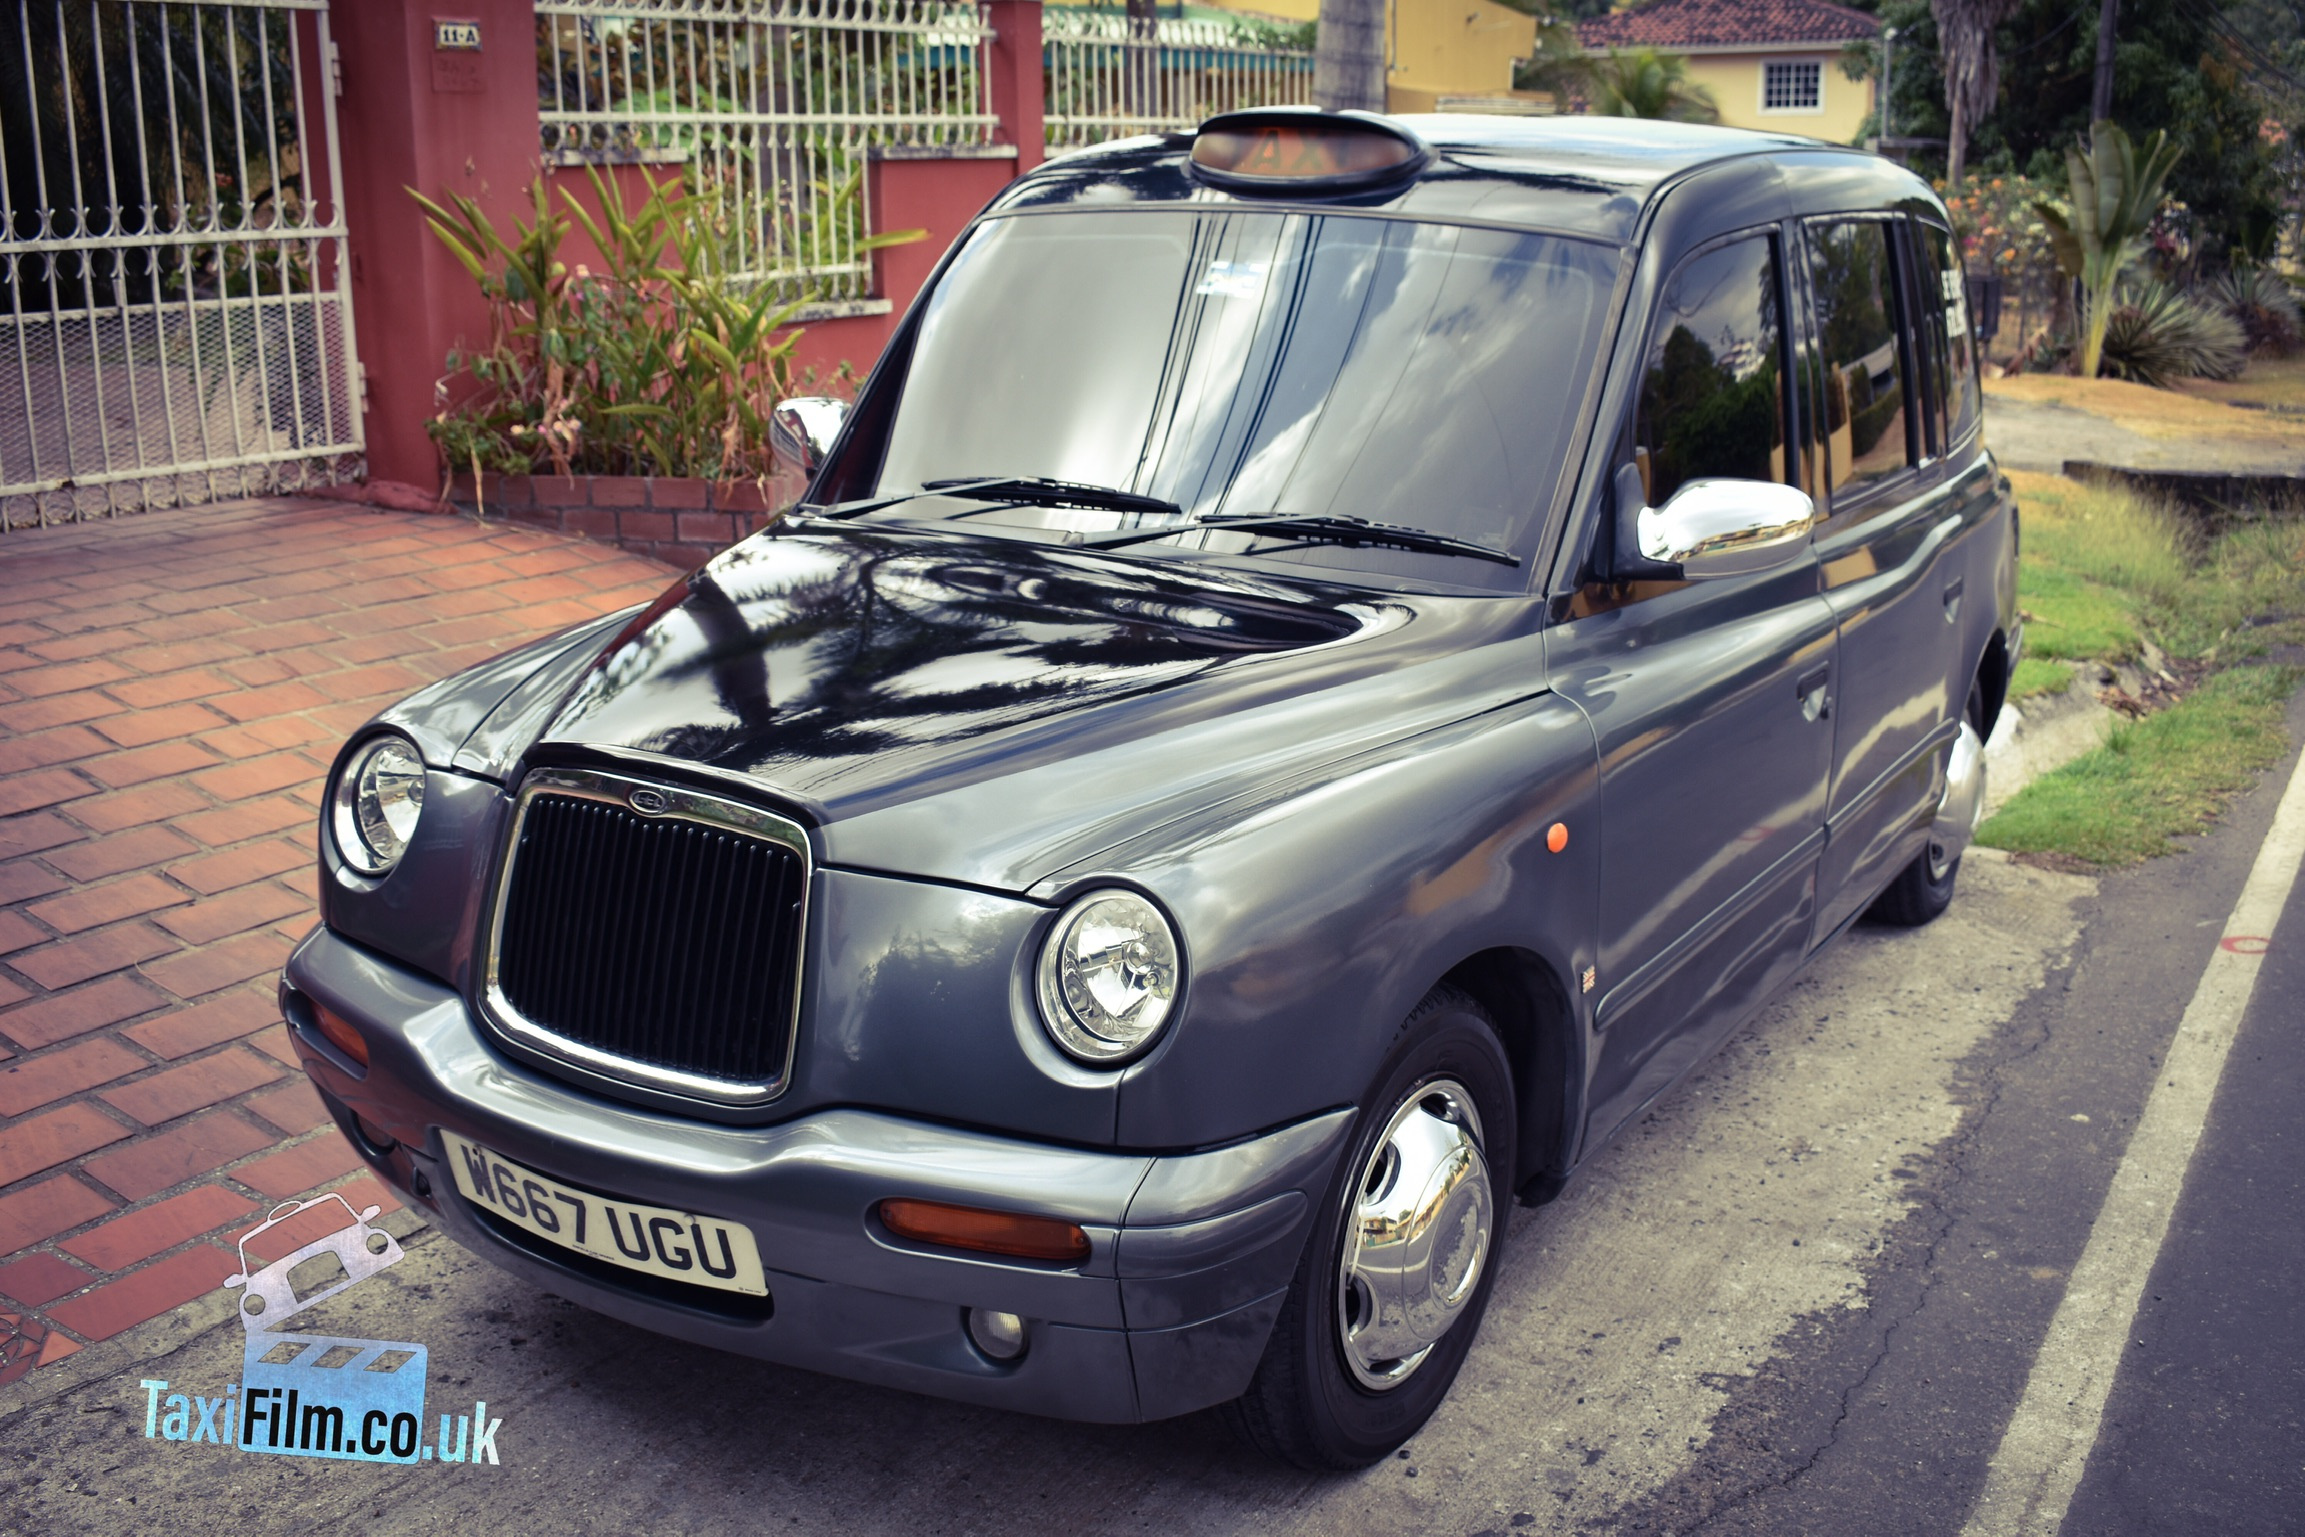 Black over Silver LTI TX1 Taxi
2000, Panama
ref PAN001